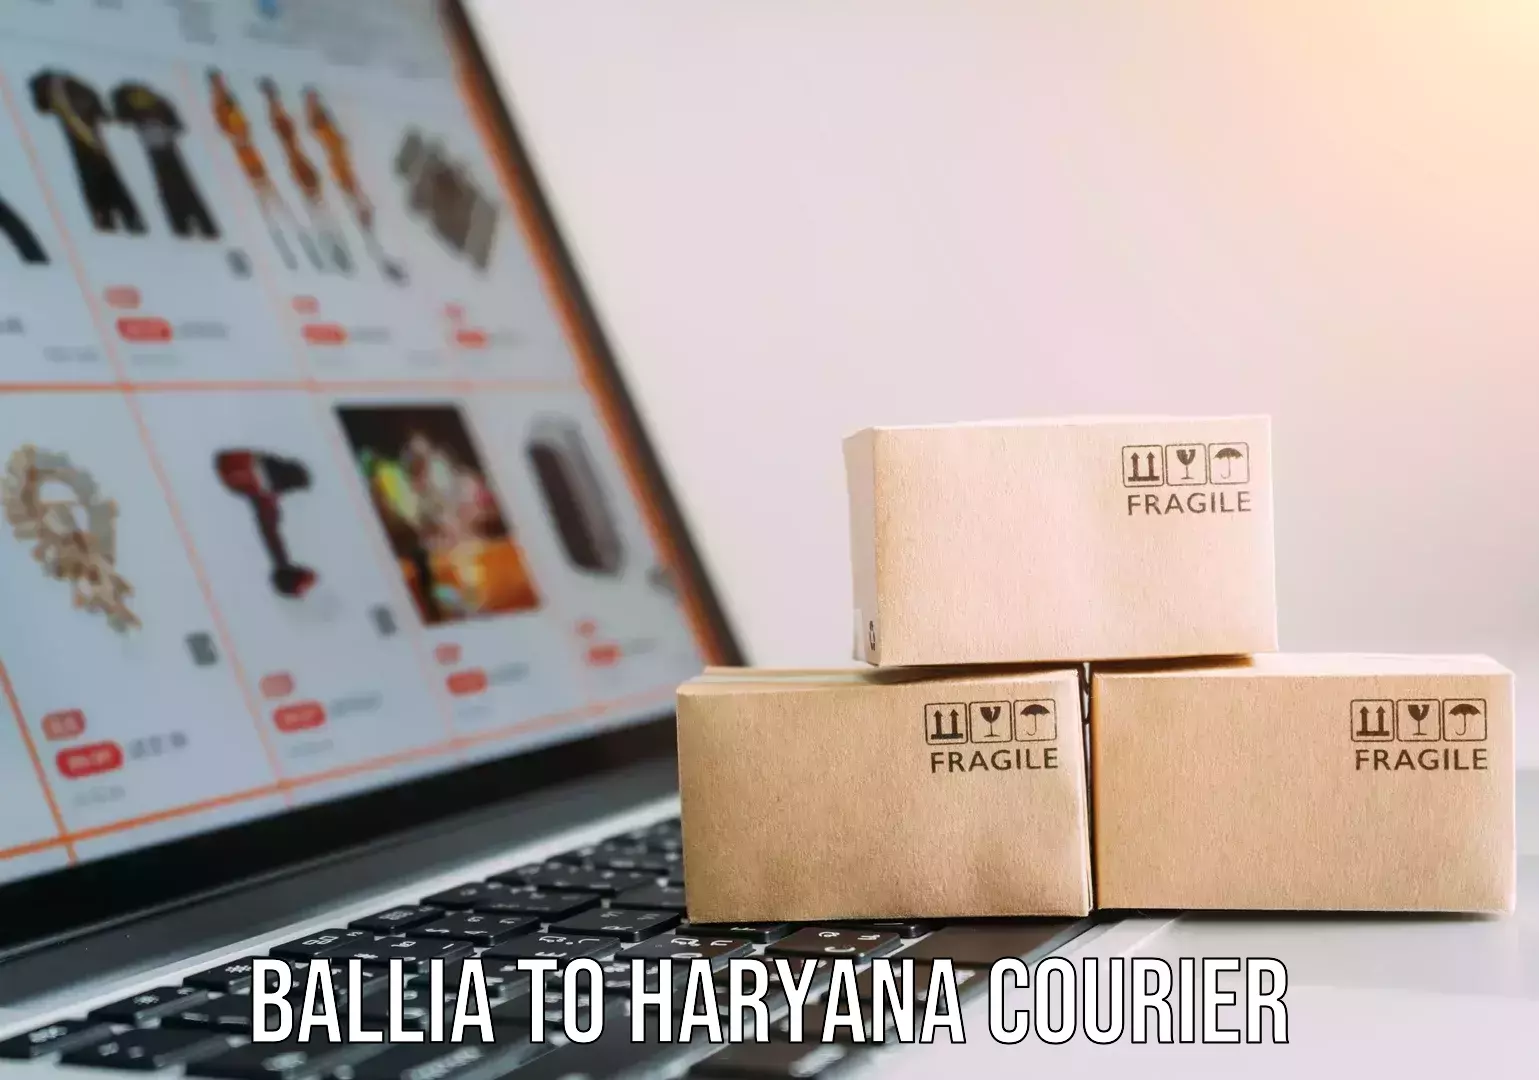 Global logistics network Ballia to Haryana